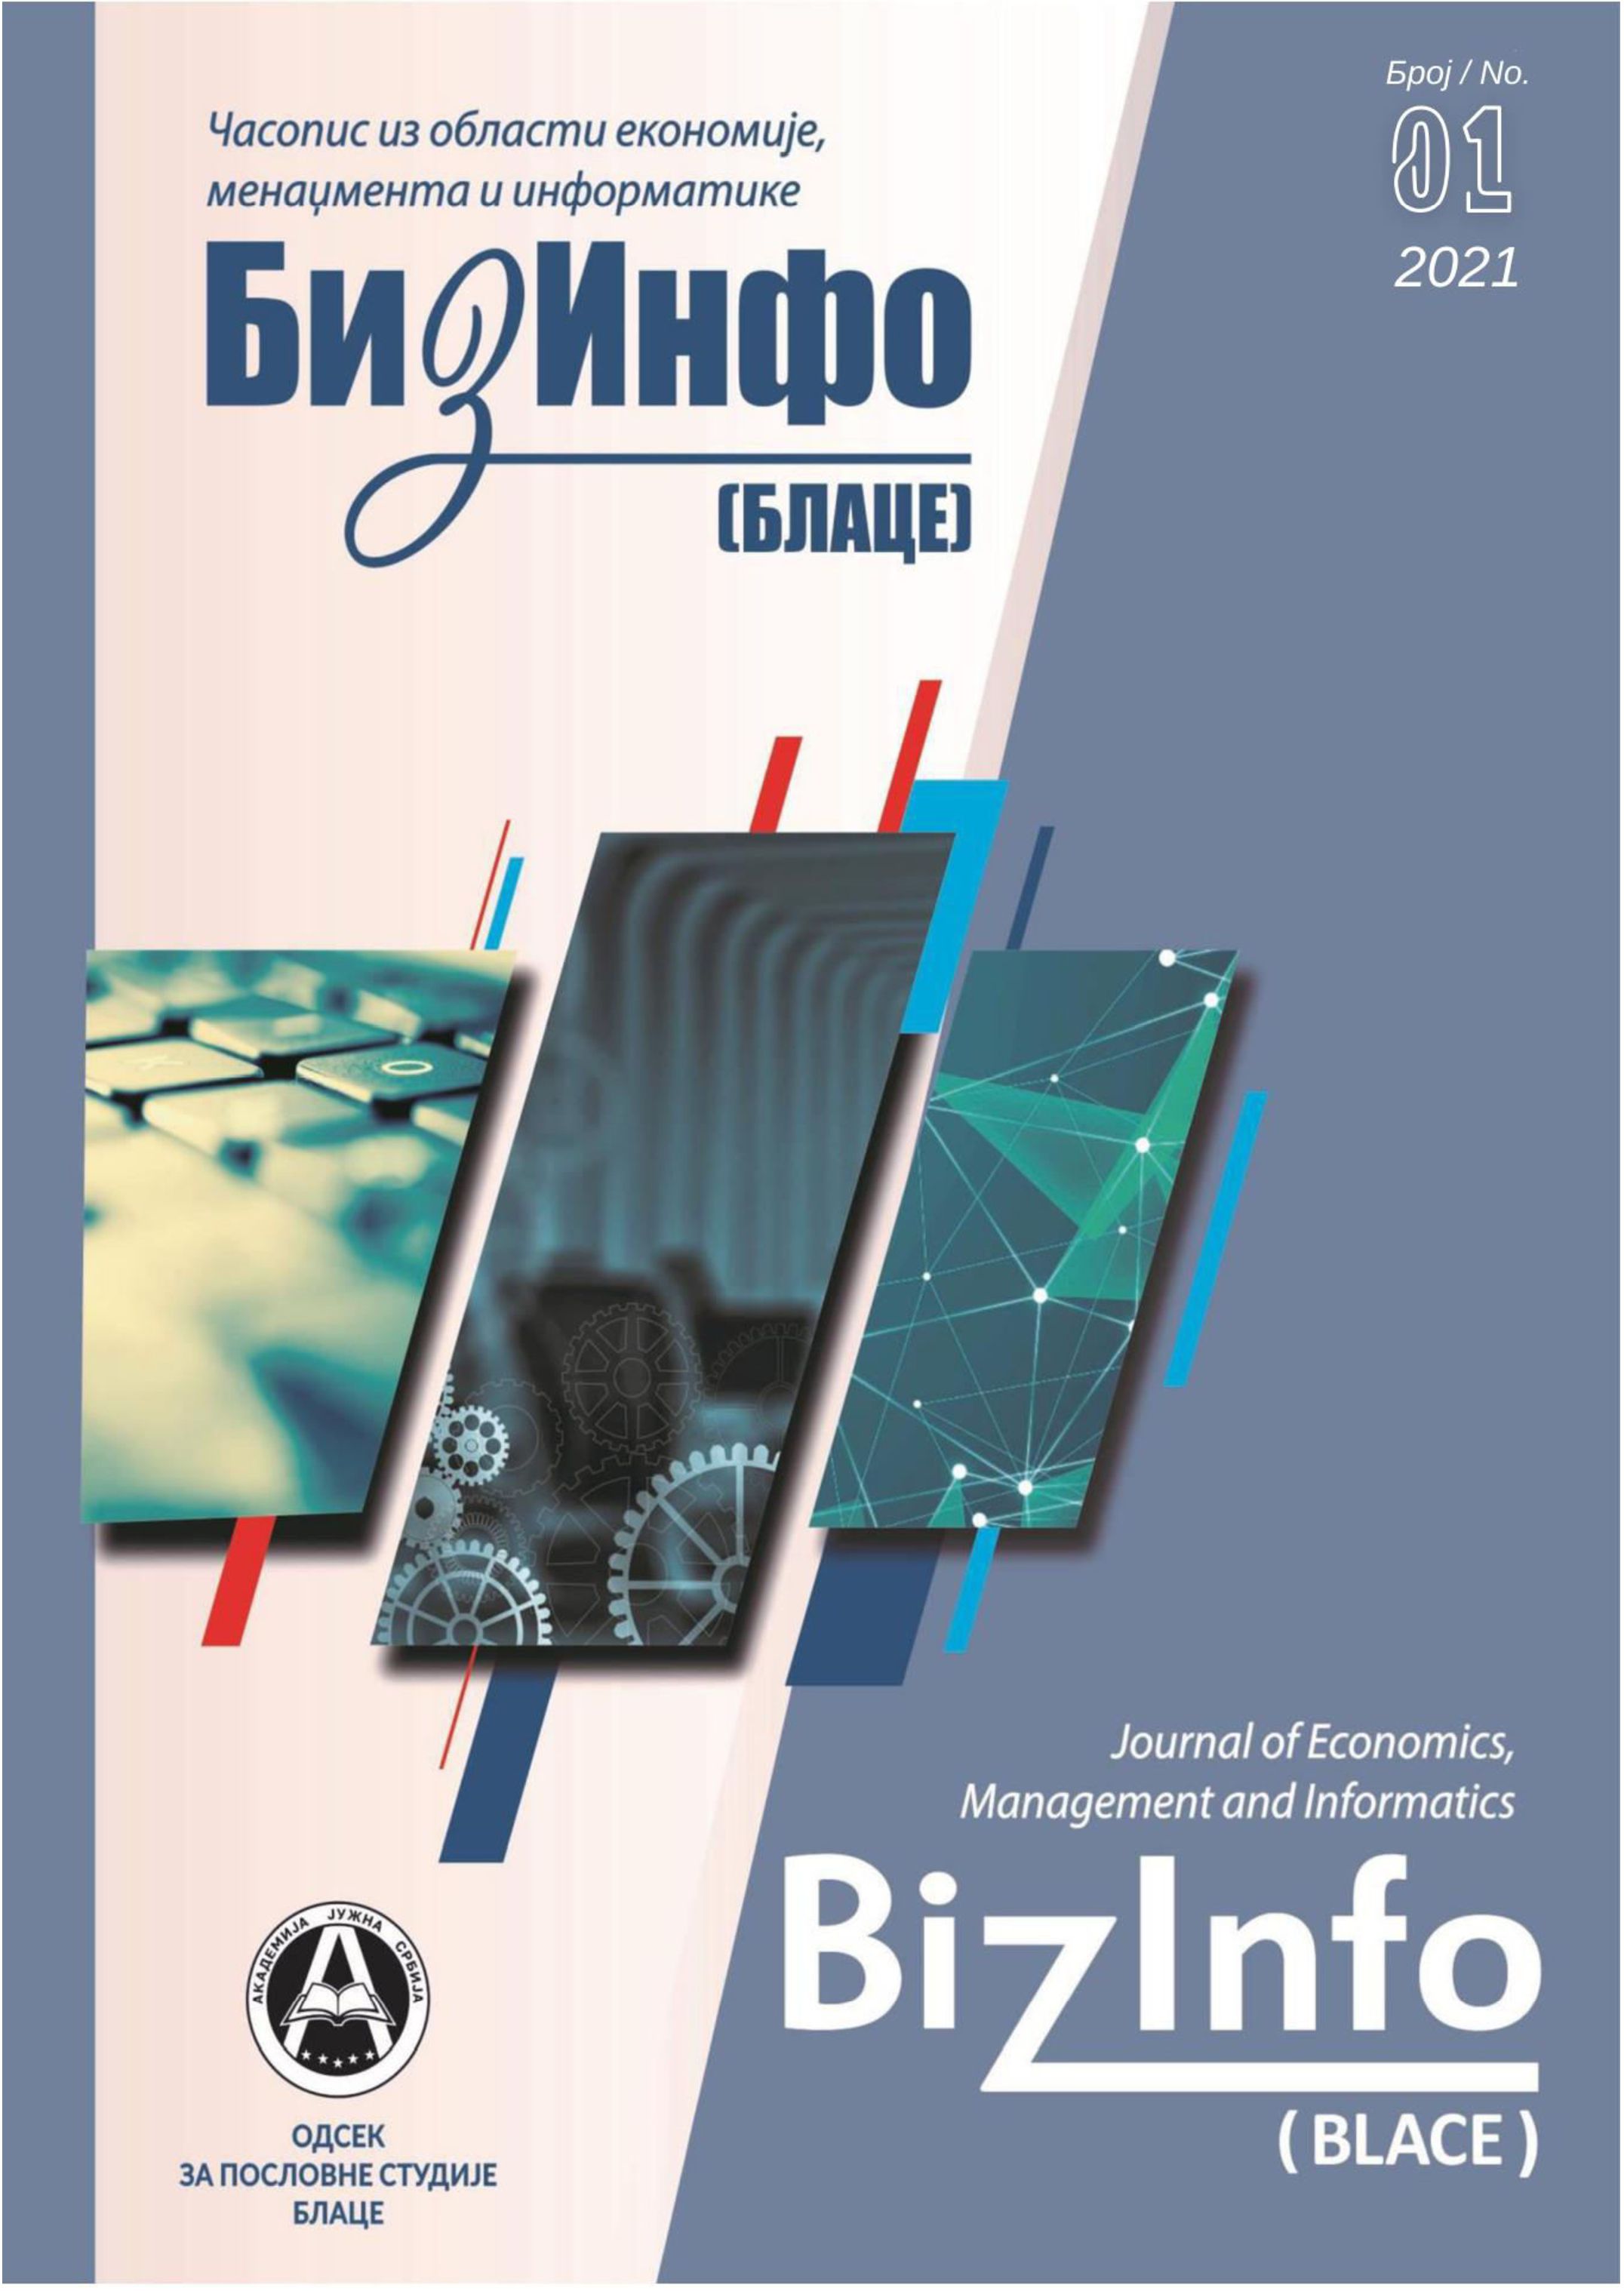 					View Vol. 12 No. 1 (2021): BizInfo (Blace) Journal of Economics, Management and Informatics
				